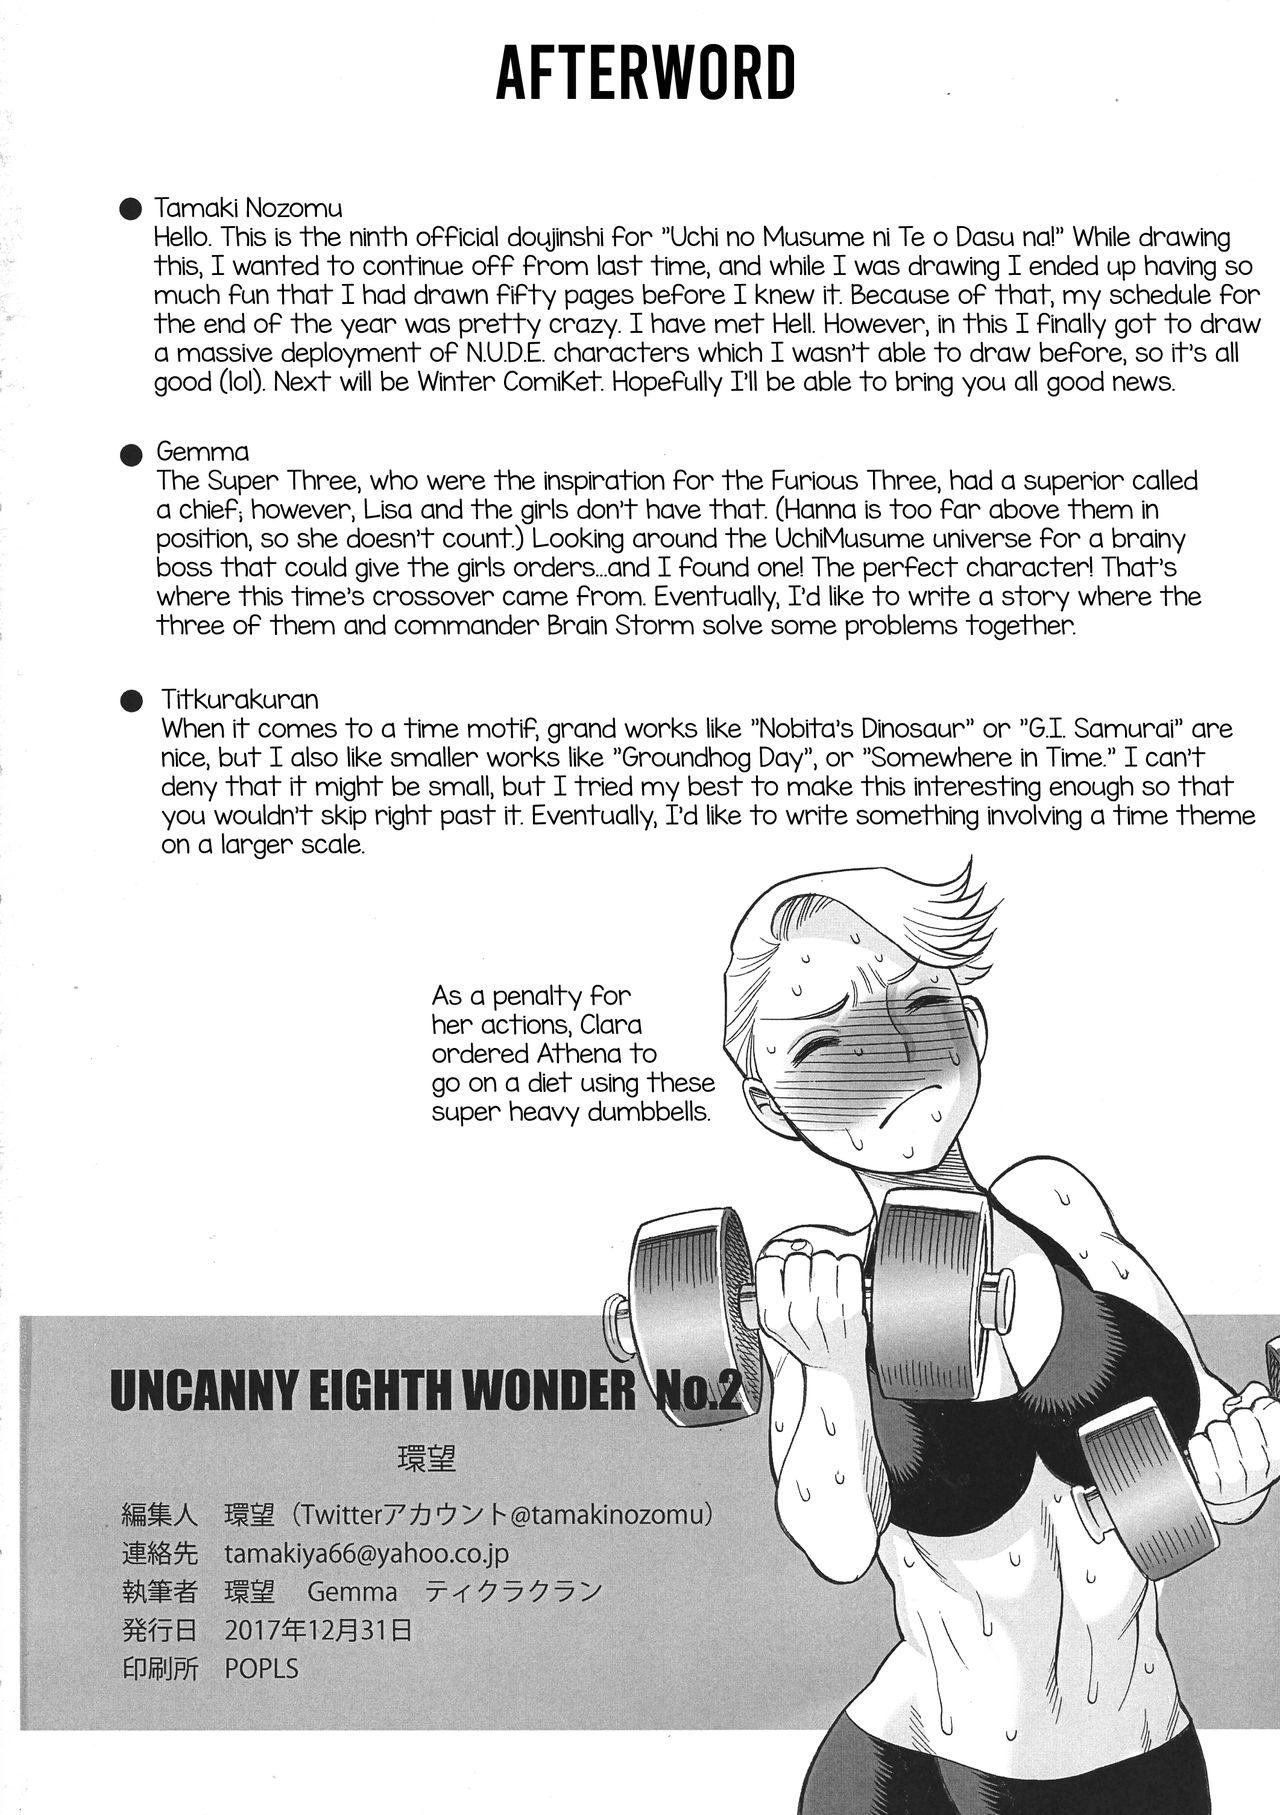 Head Uncanny EIGHTHWONDER No.2 - Uchi no musume ni te o dasuna Doggy Style Porn - Page 55